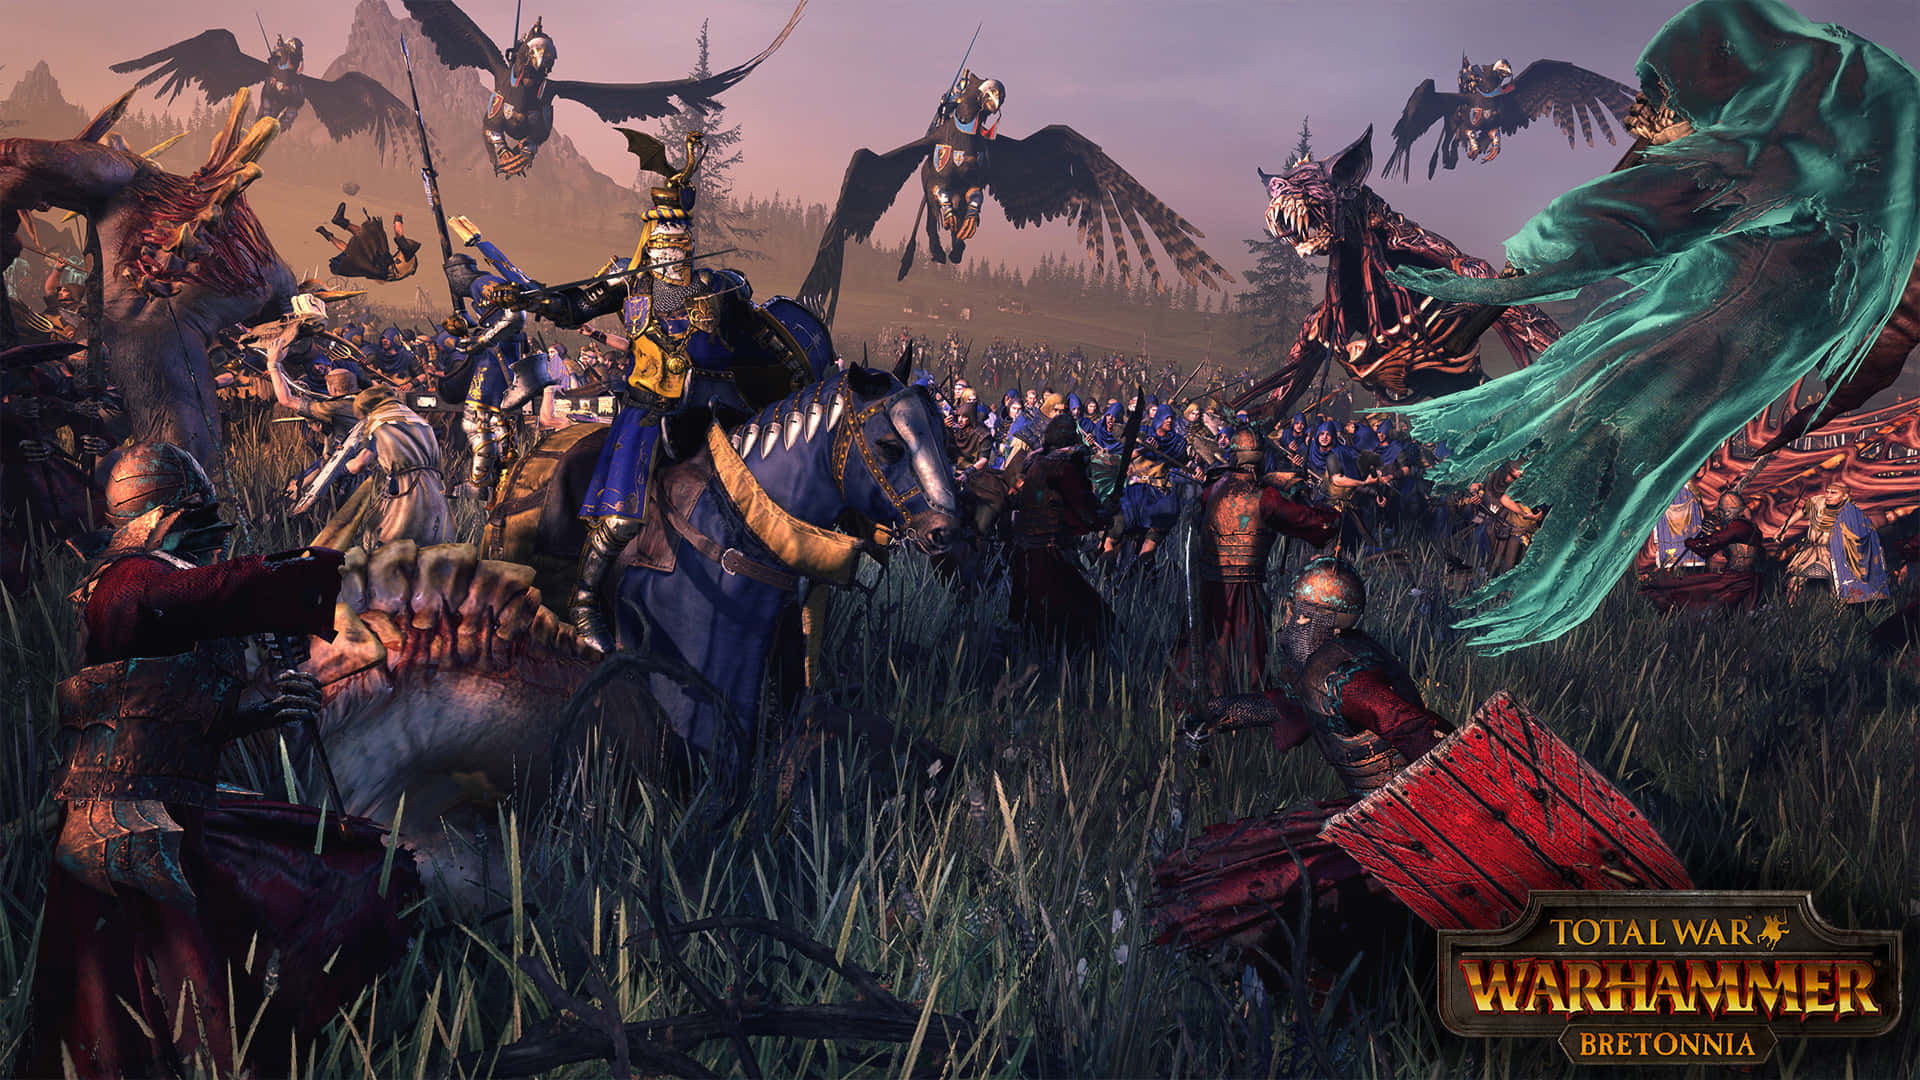 Bretonnia1920x1080 Total War Warhammer Bakgrundsbild.